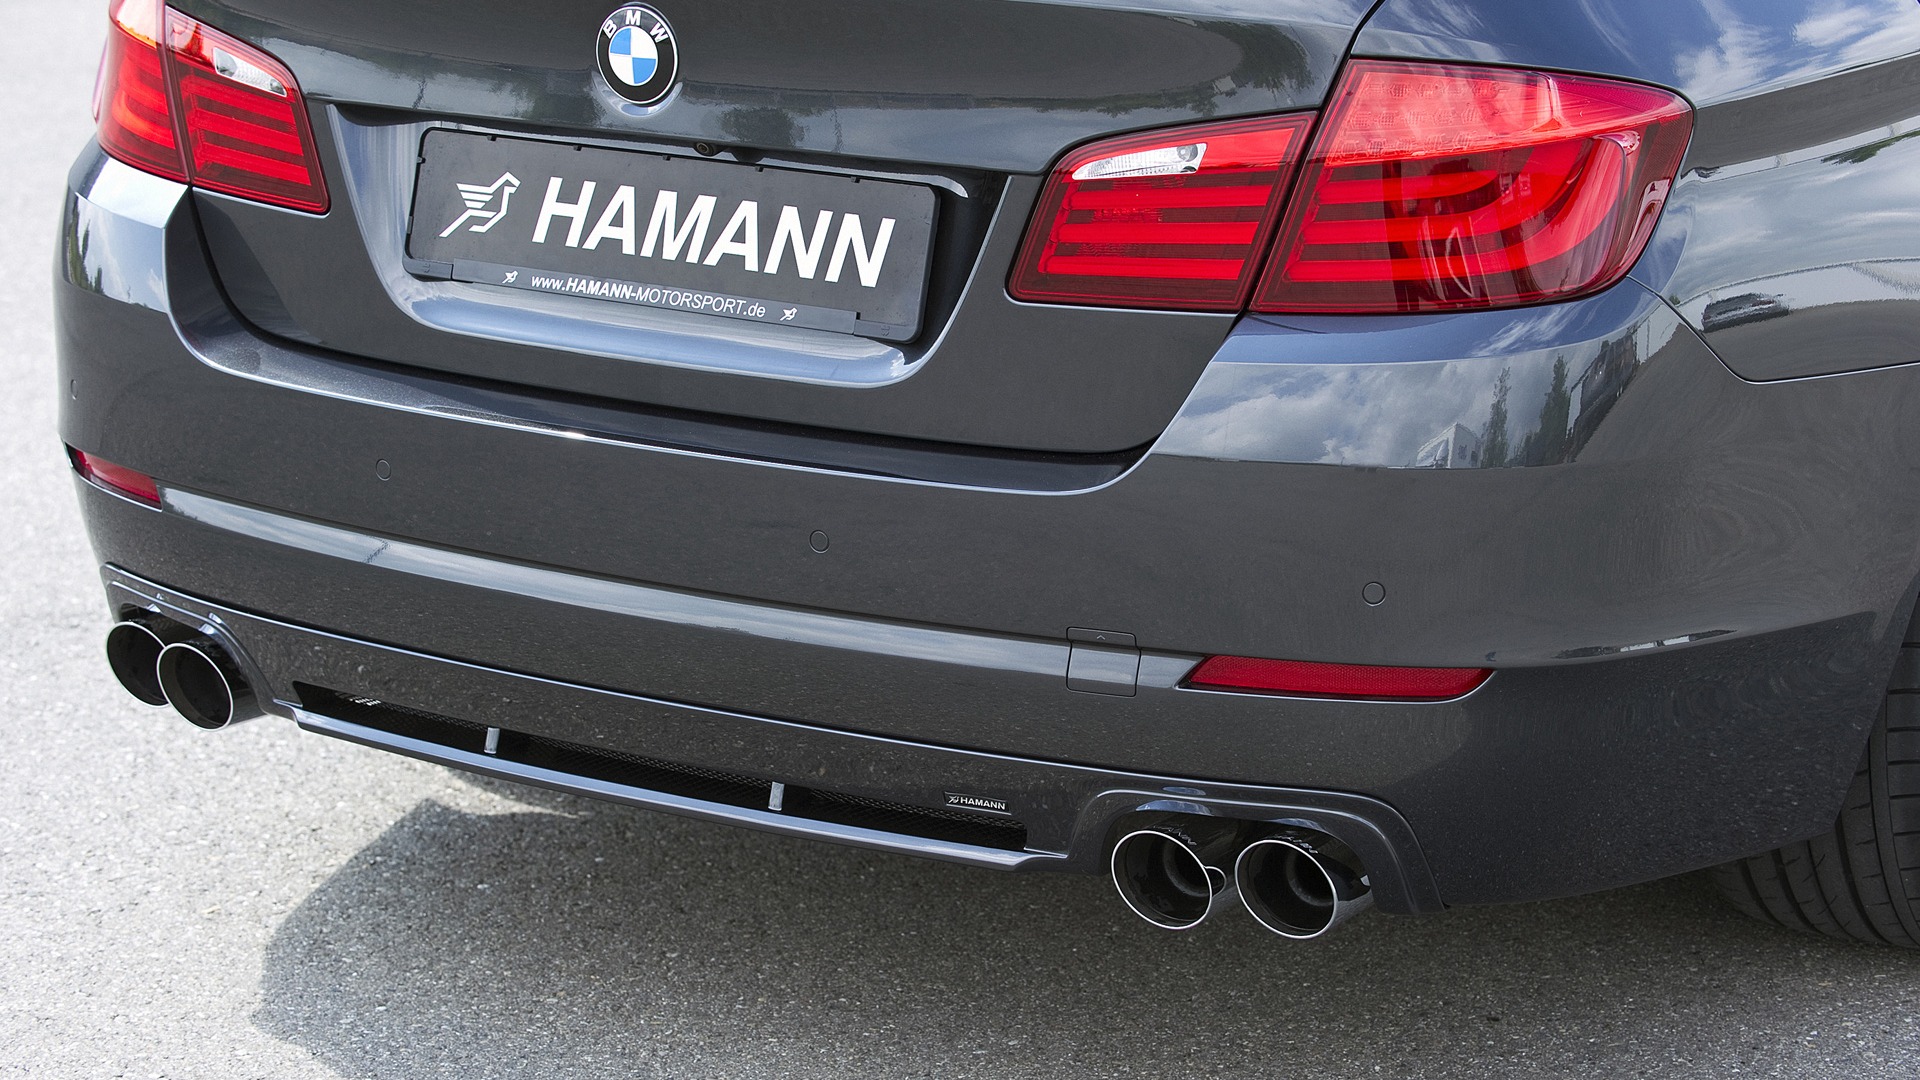 Hamann BMW 5-series F10 - 2010 寶馬 #18 - 1920x1080